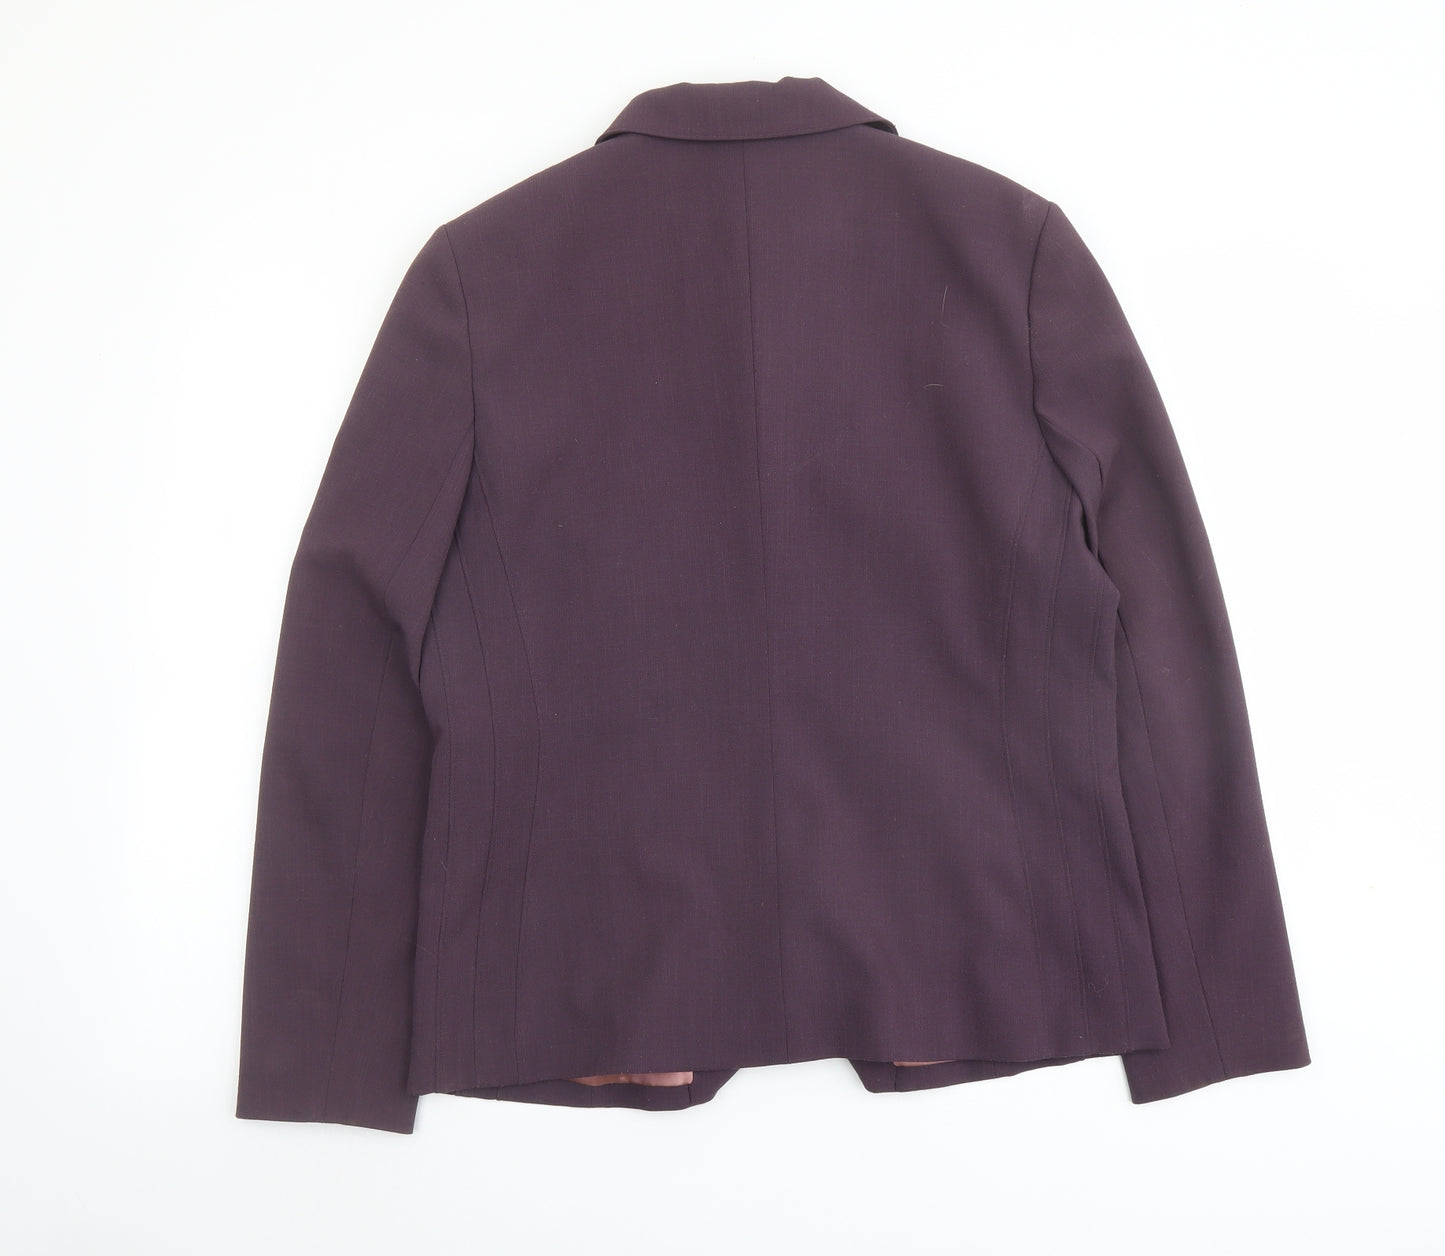 Lakeland Womens Purple Jacket Blazer Size 14 Button